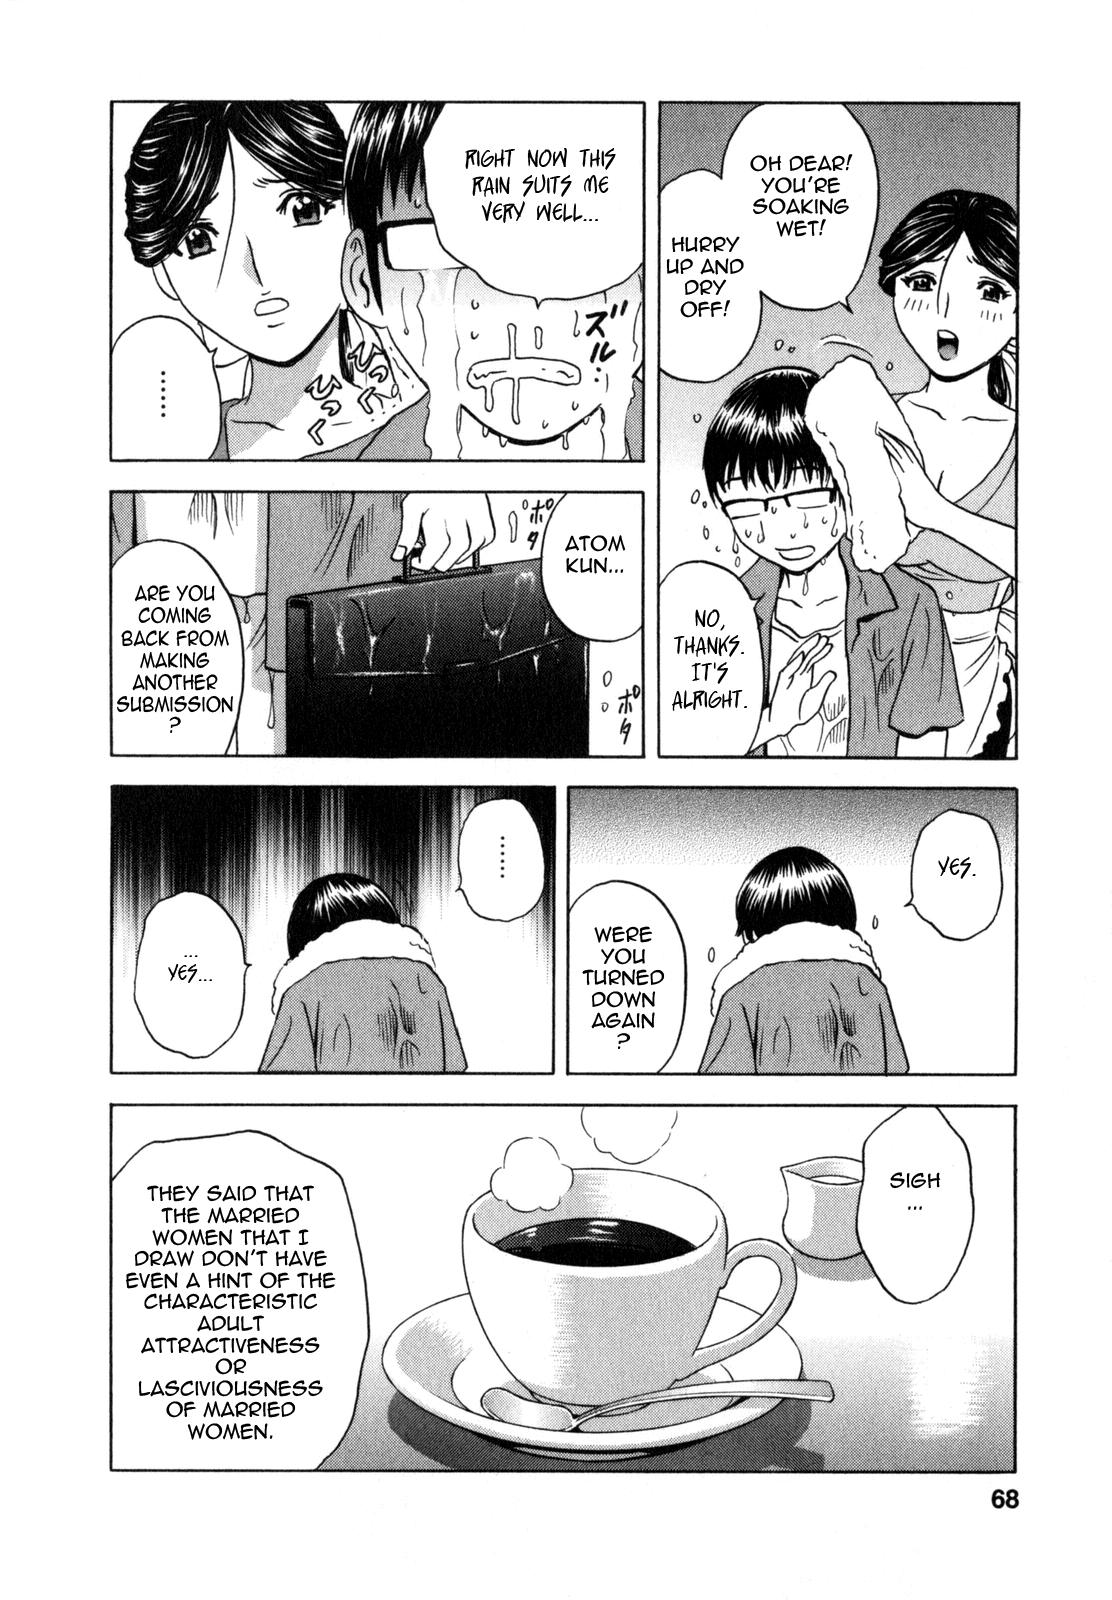 [Hidemaru] Life with Married Women Just Like a Manga 1 - Ch. 1-7 [English] {Tadanohito} 71